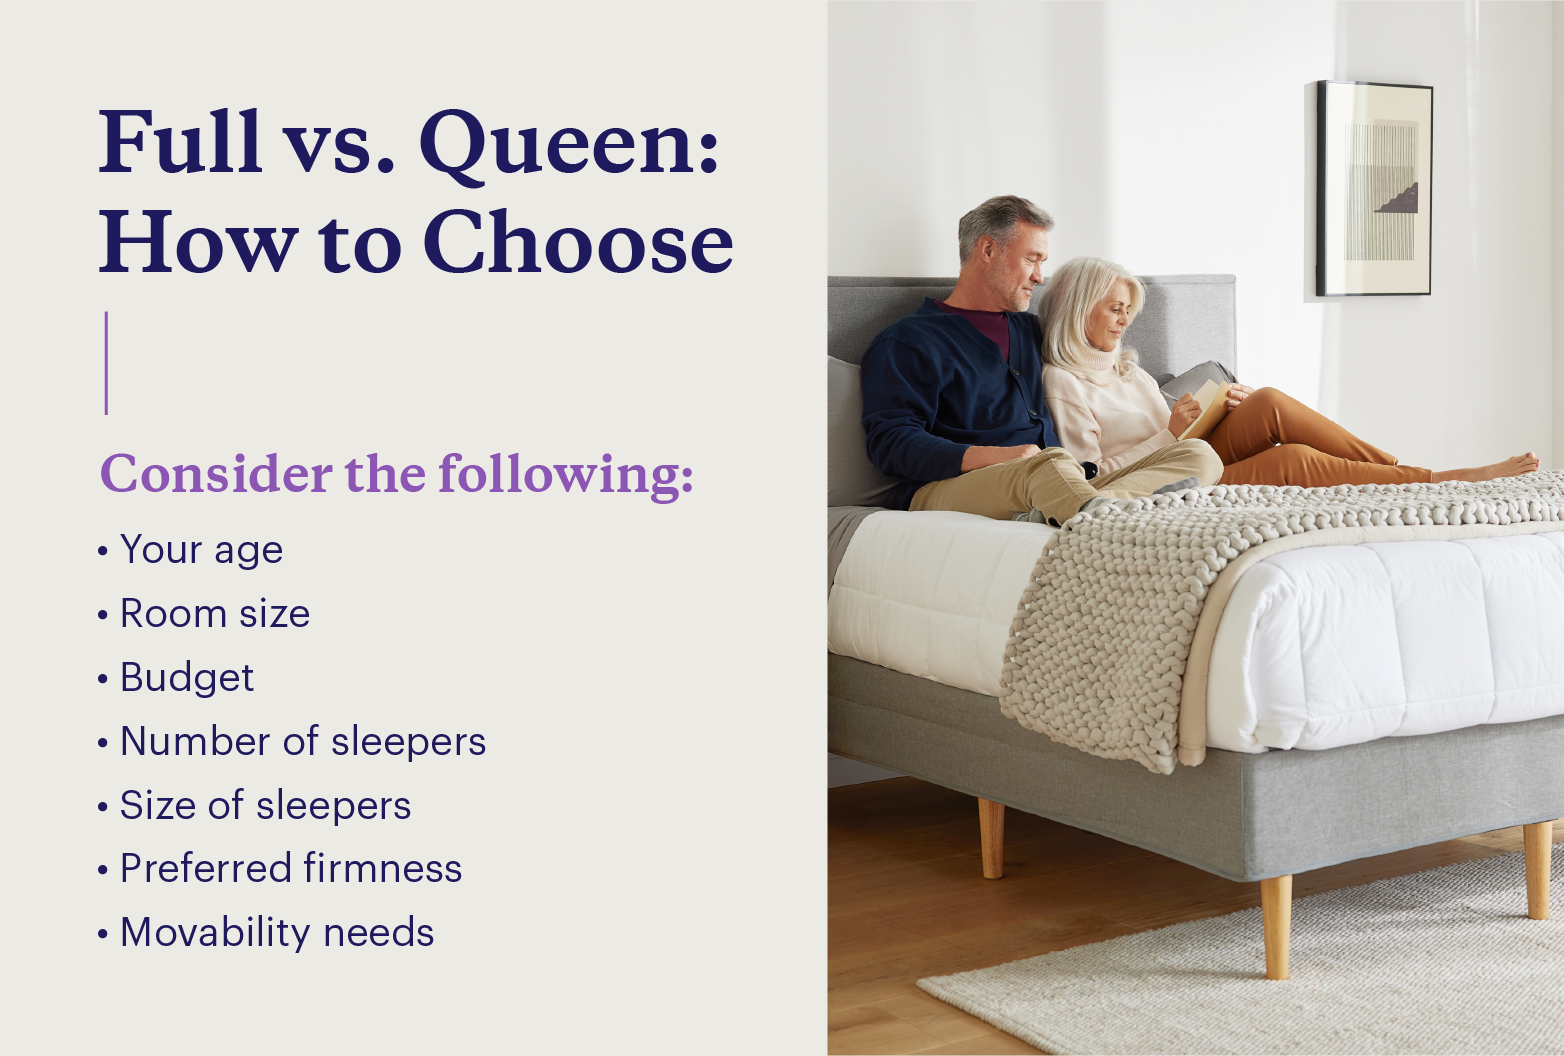 Seven considerations for choosing between full vs. queen size mattresses.